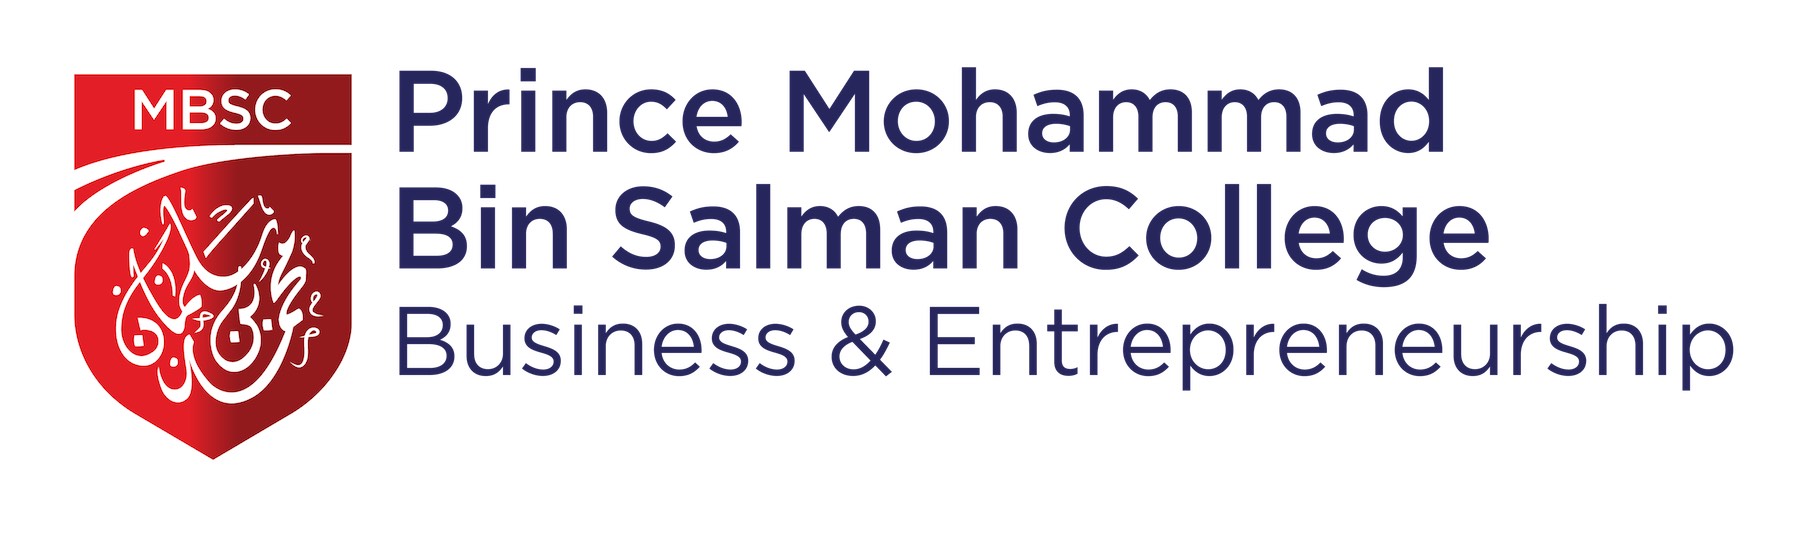 Prince Mohammad Bin Salman College of Business and Entrepreneurship